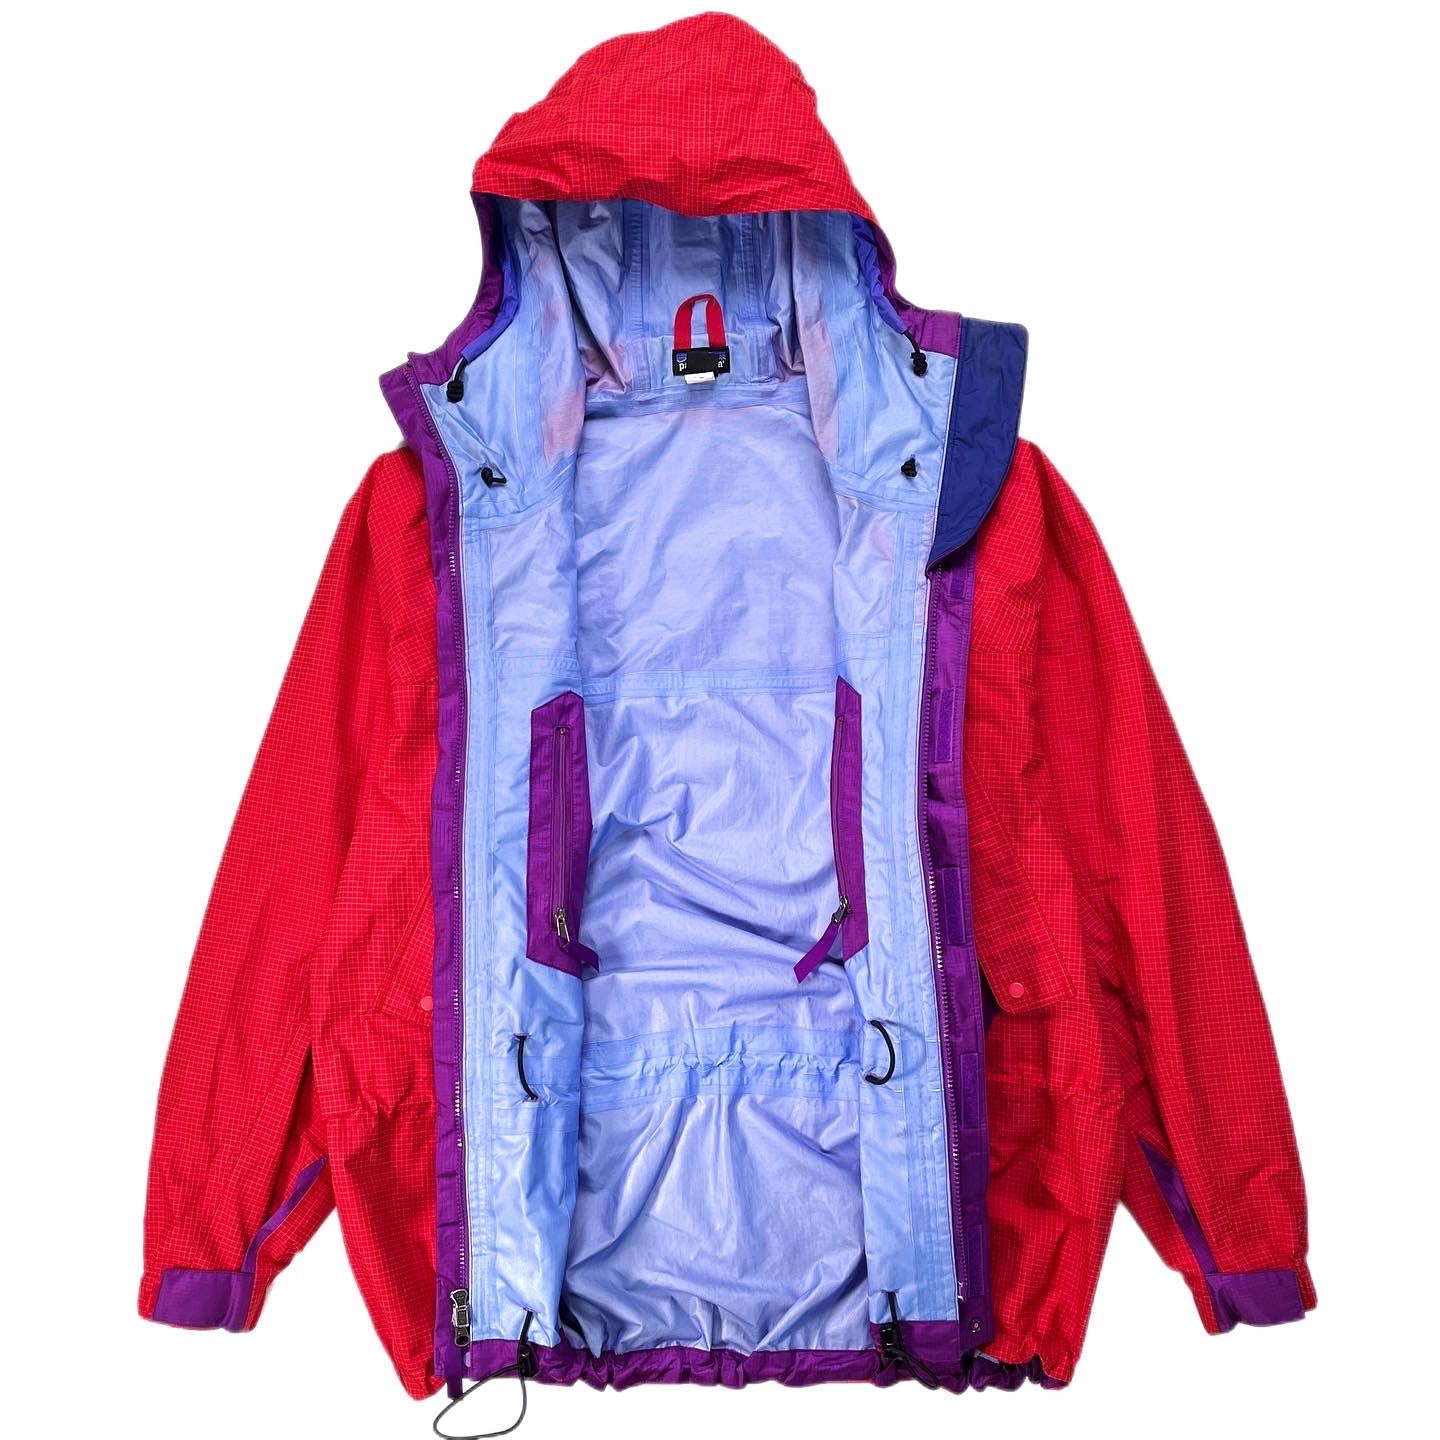 1995 Patagonia Super Alpine “Gridman” Jacket, French Red (XL)